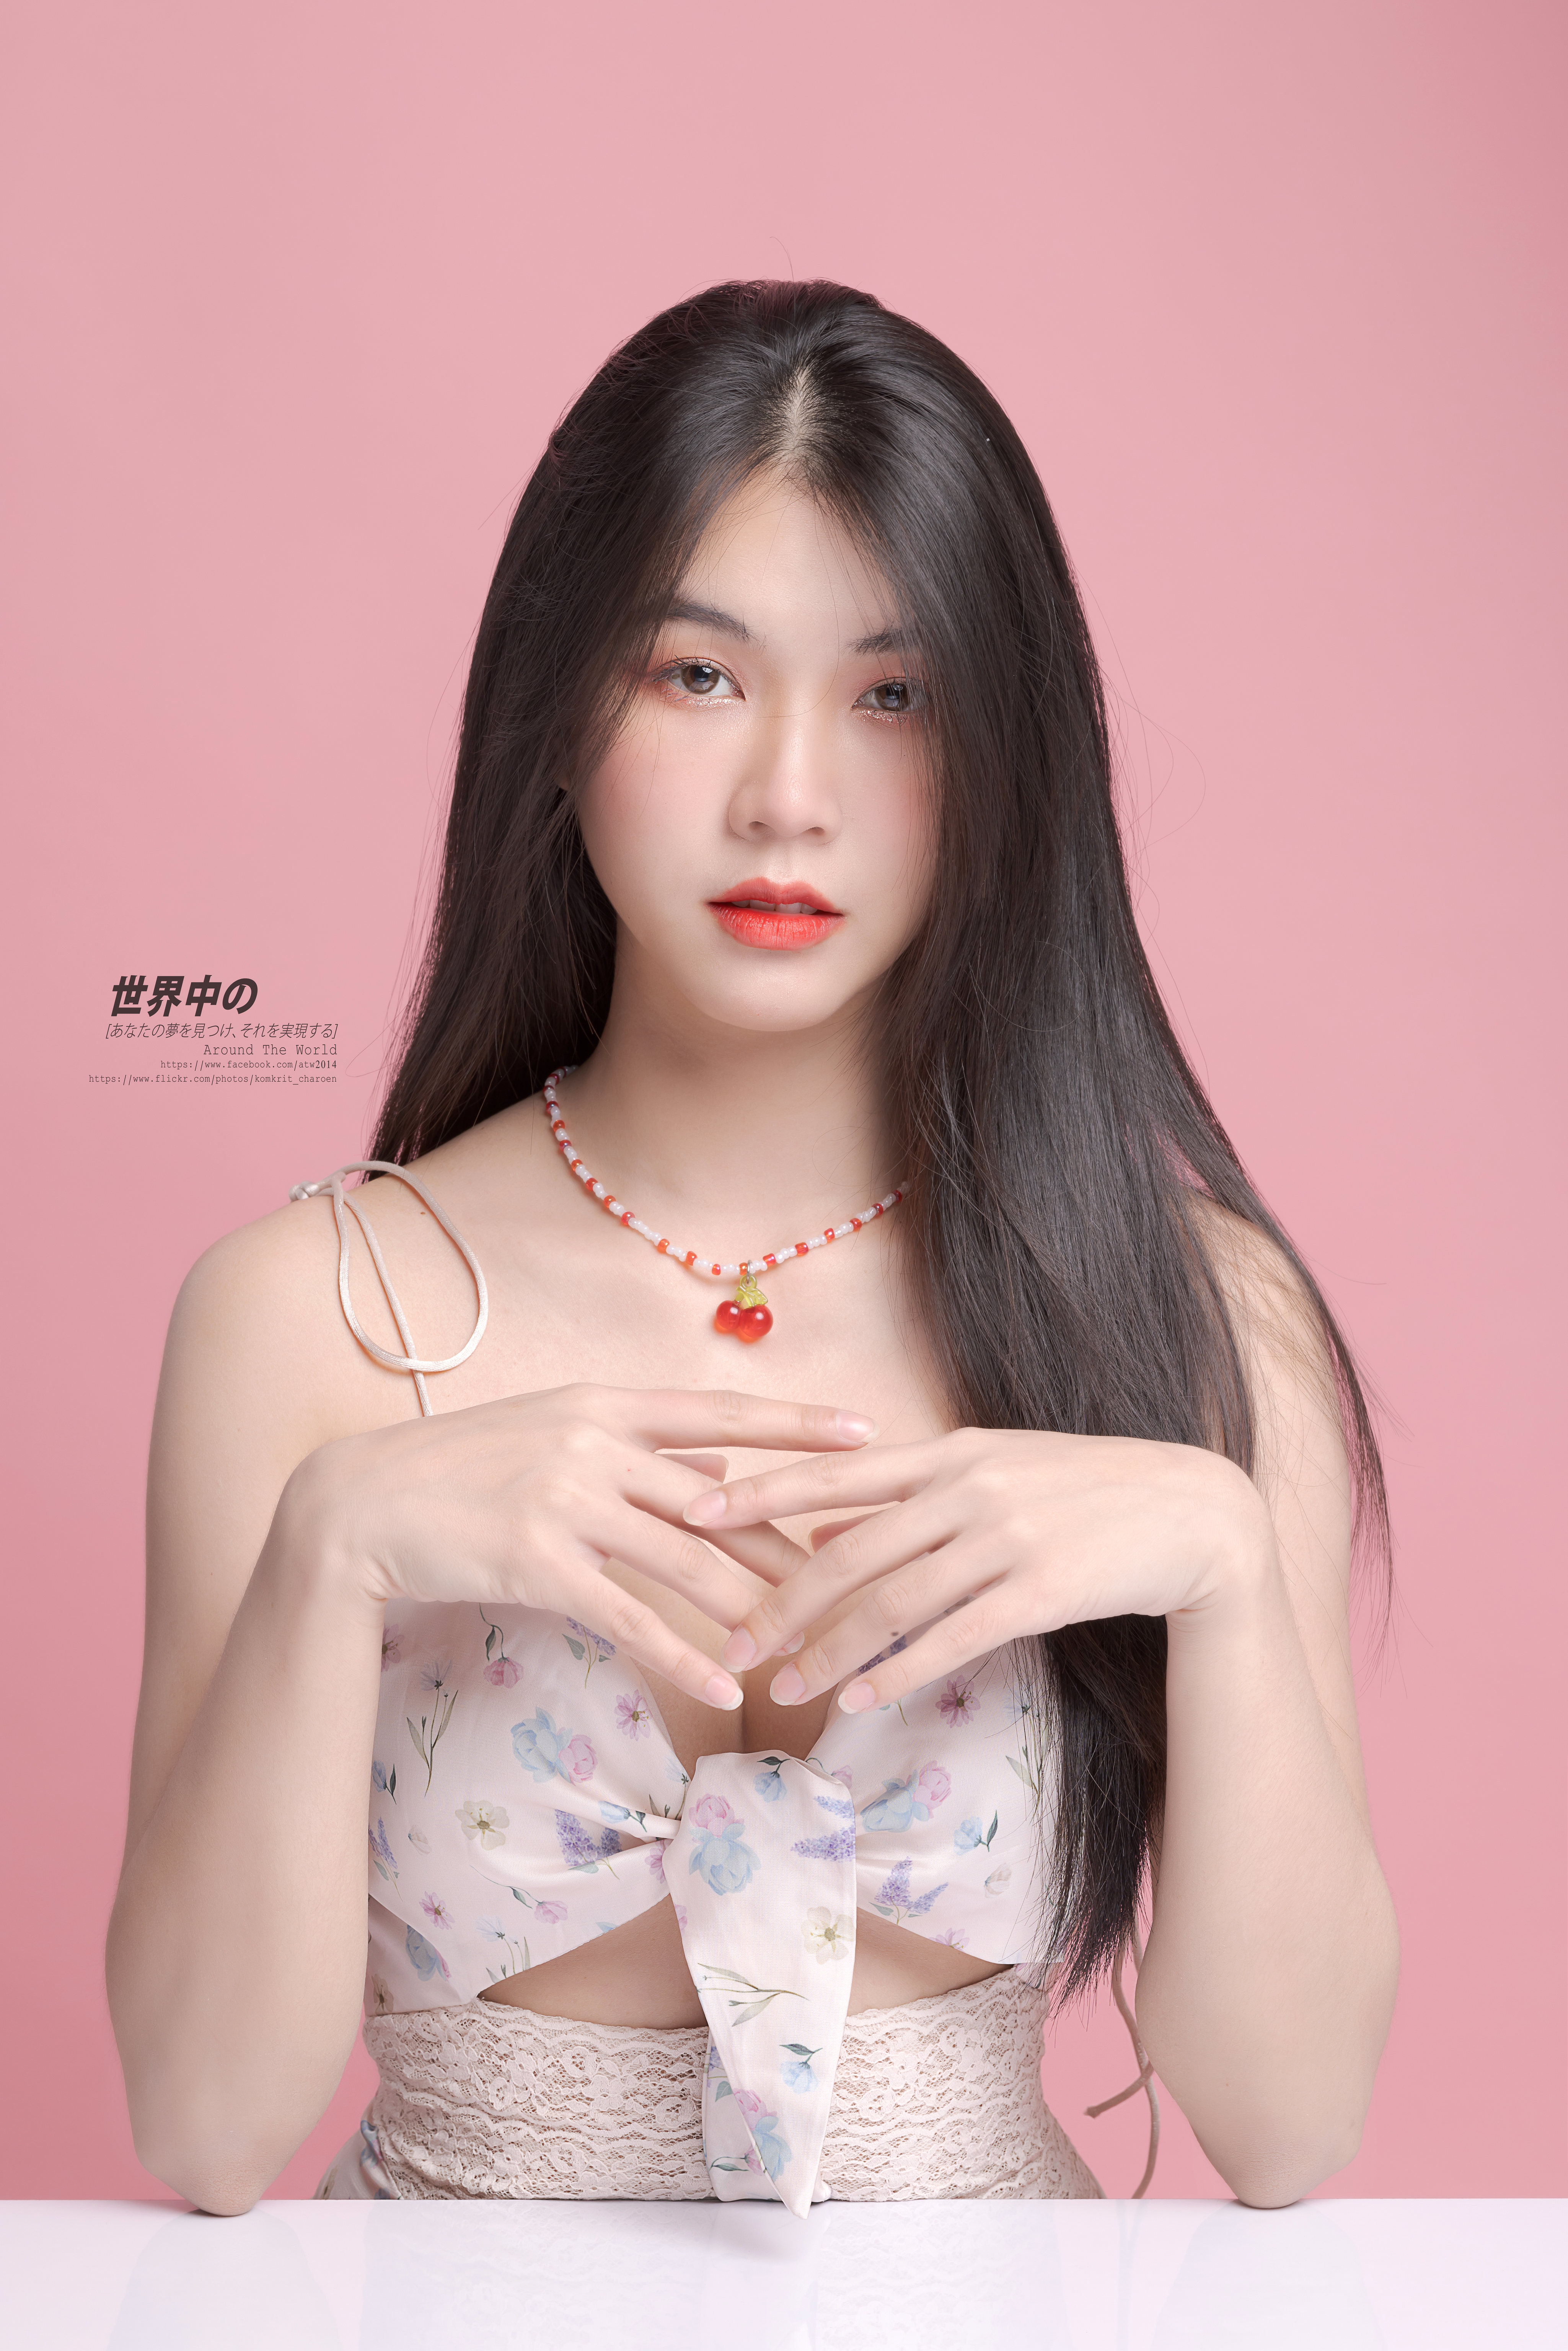 Komkrit Charoen Women Asian Looking At Viewer Necklace Makeup 4098x6144